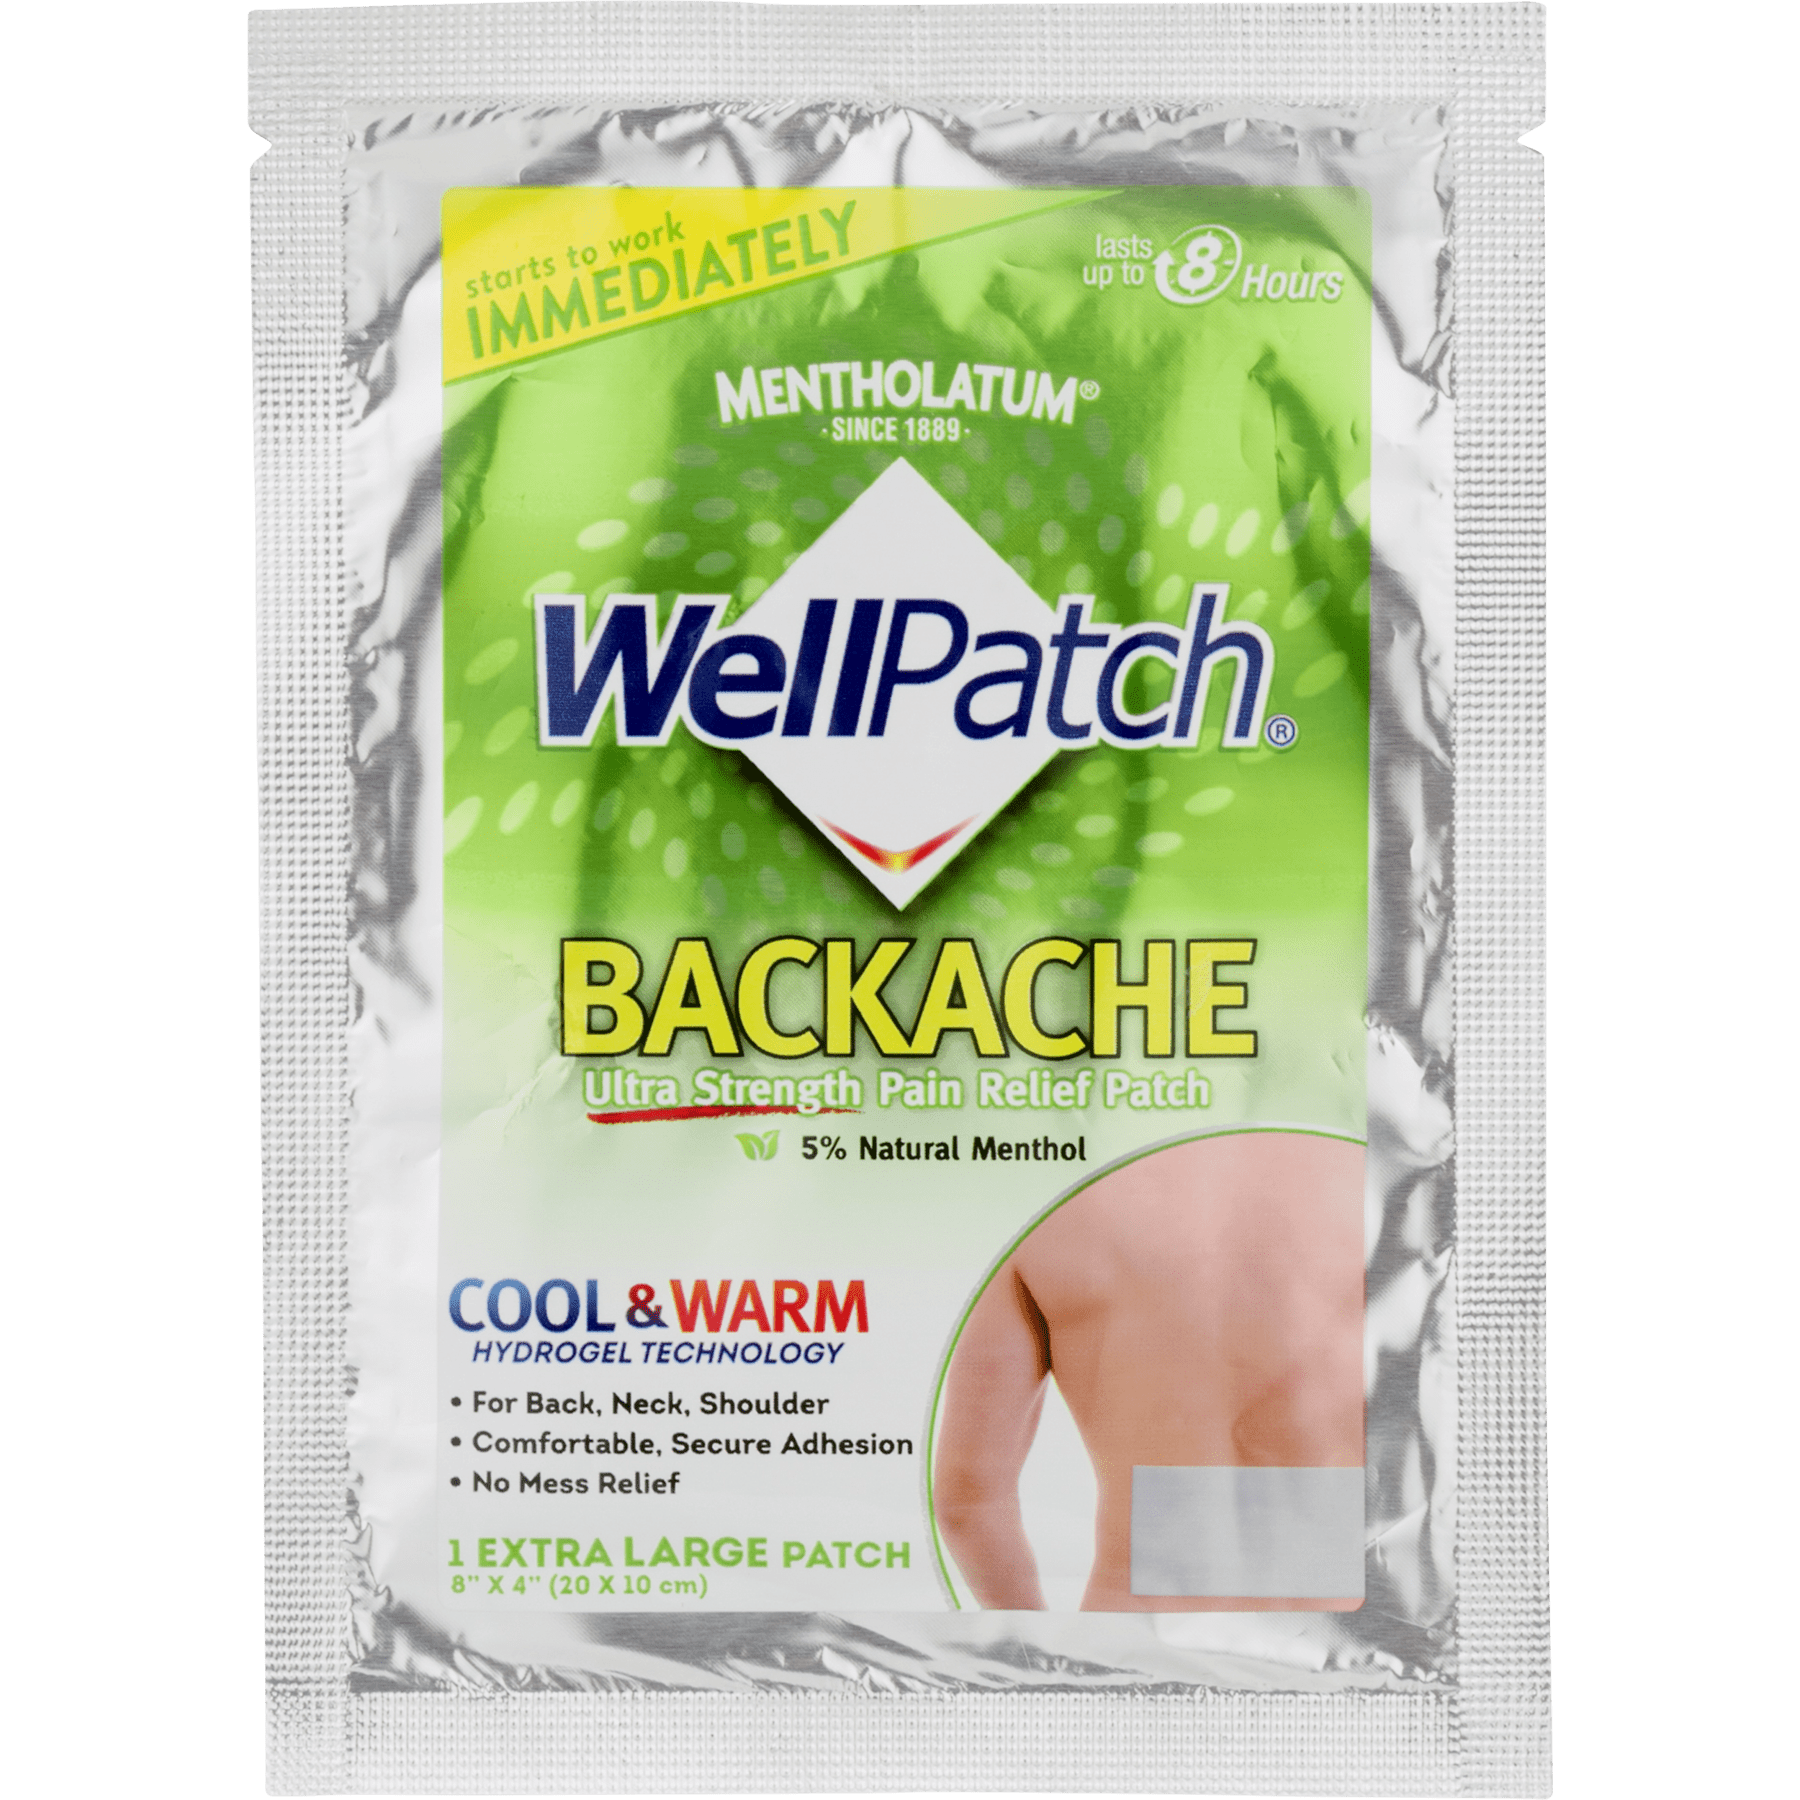 Caseof 42-Wellpatch Migraine Cooling Patch 4Ct by Mentholatum